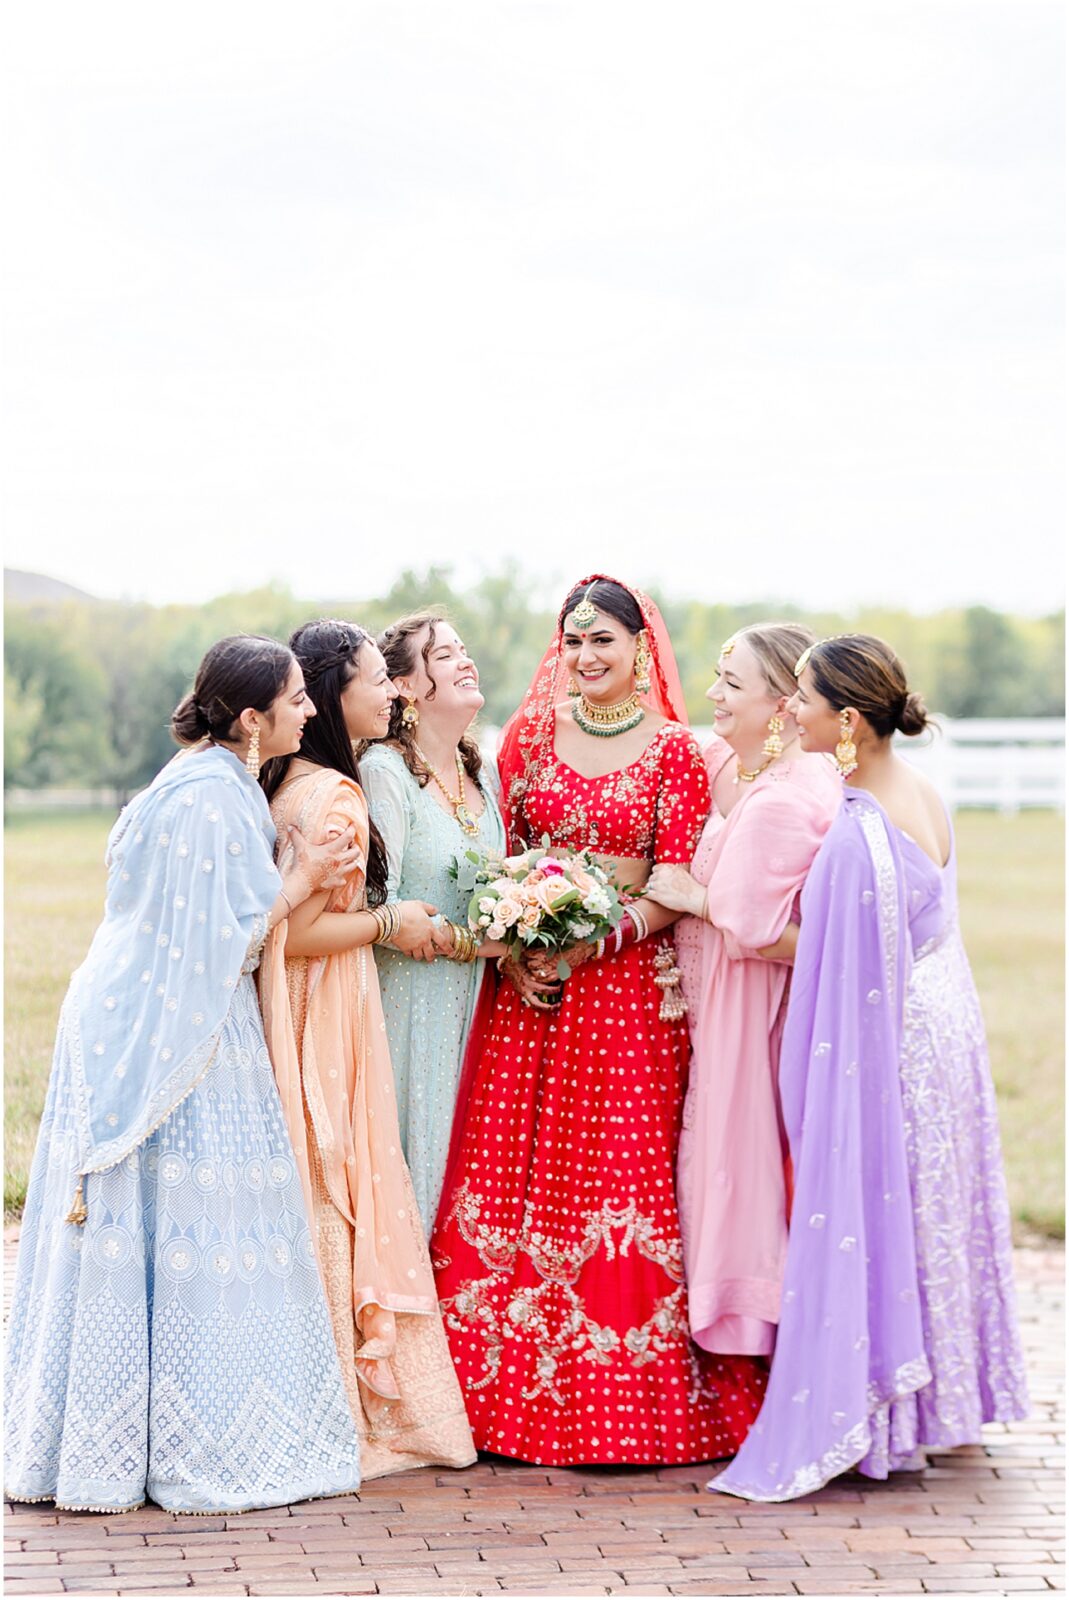 colorful indian fusion wedding bridal party photos - stl and kansas city wedding photographer - south asian bridal party portraits - mariam saifan photography